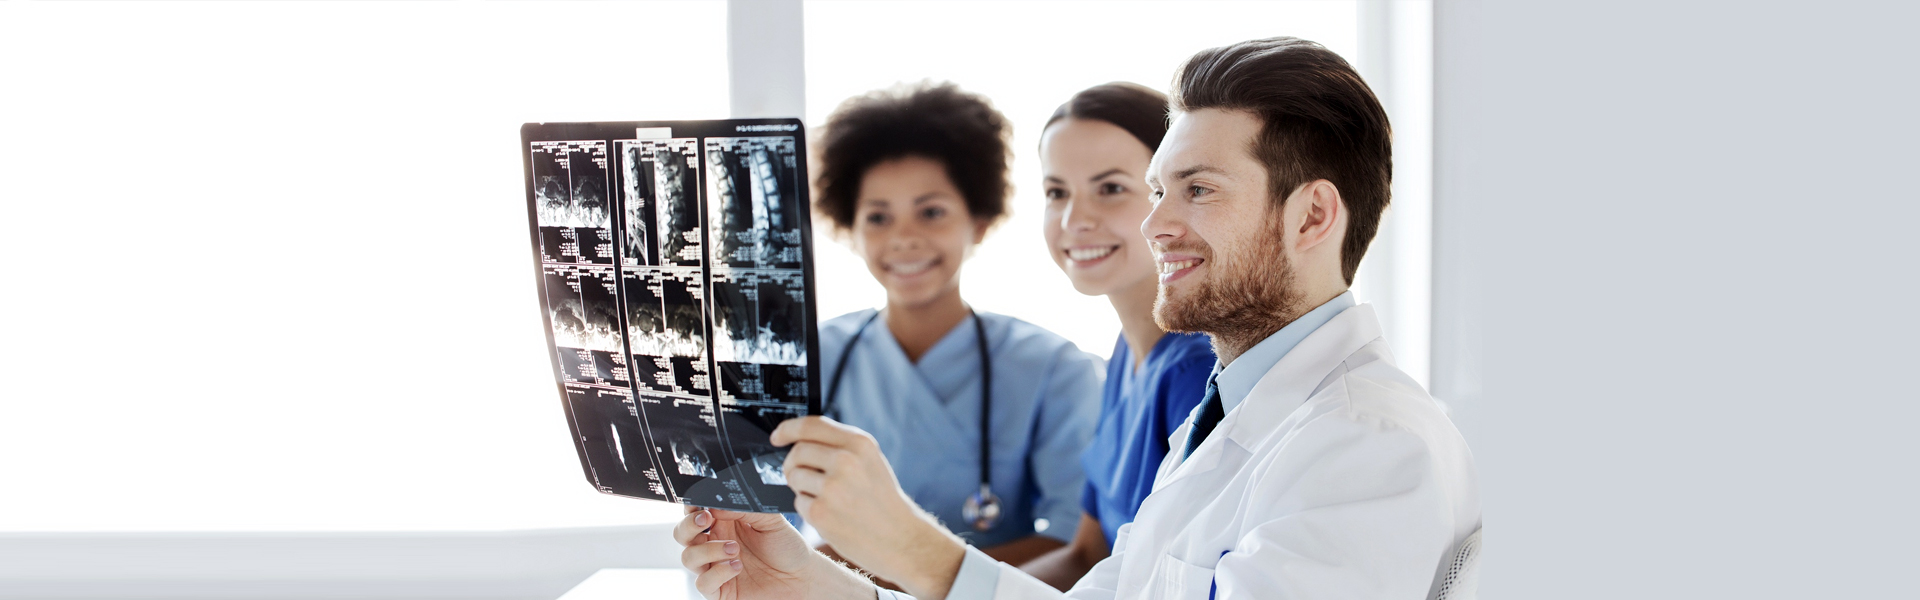 5 Top Advantages of Using Advanced Medical Imaging